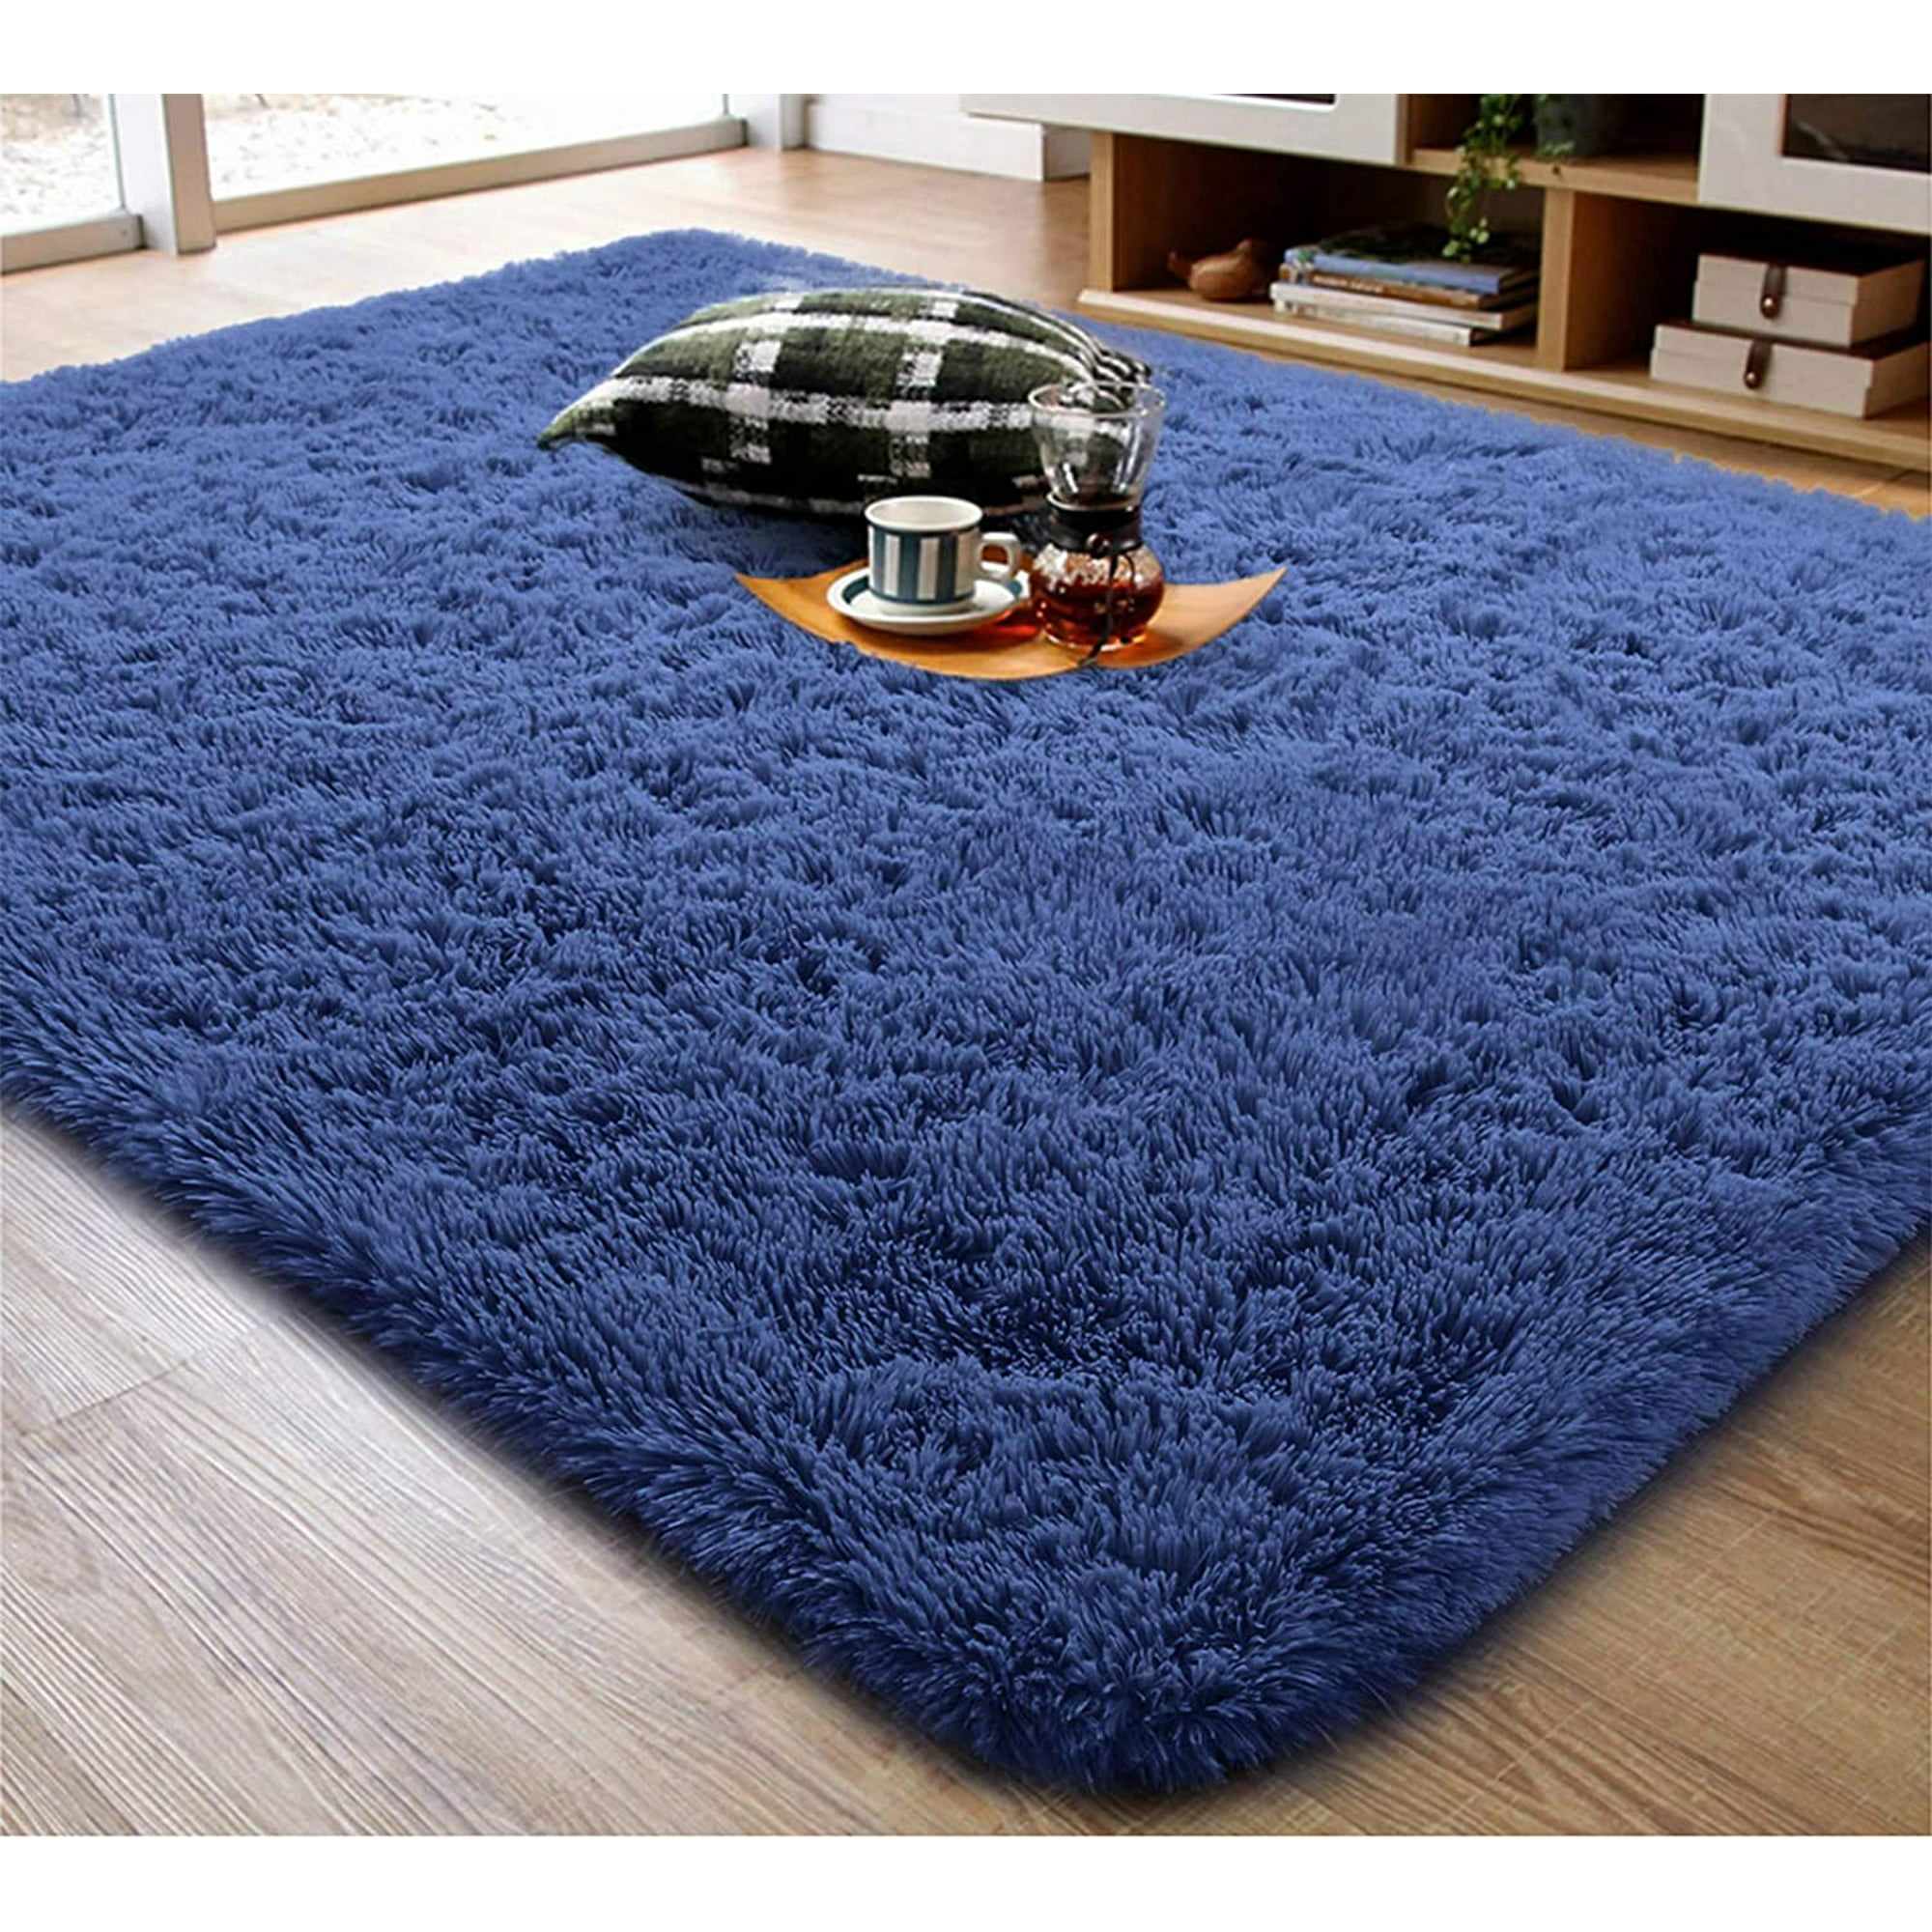 TWINNIS Luxury Fluffy Rugs Ultra Soft Shag Rug Carpet for Bedroom Living Room,Kids Room, Nursery,4x5.3 Feet,Indigo - image 1 of 8